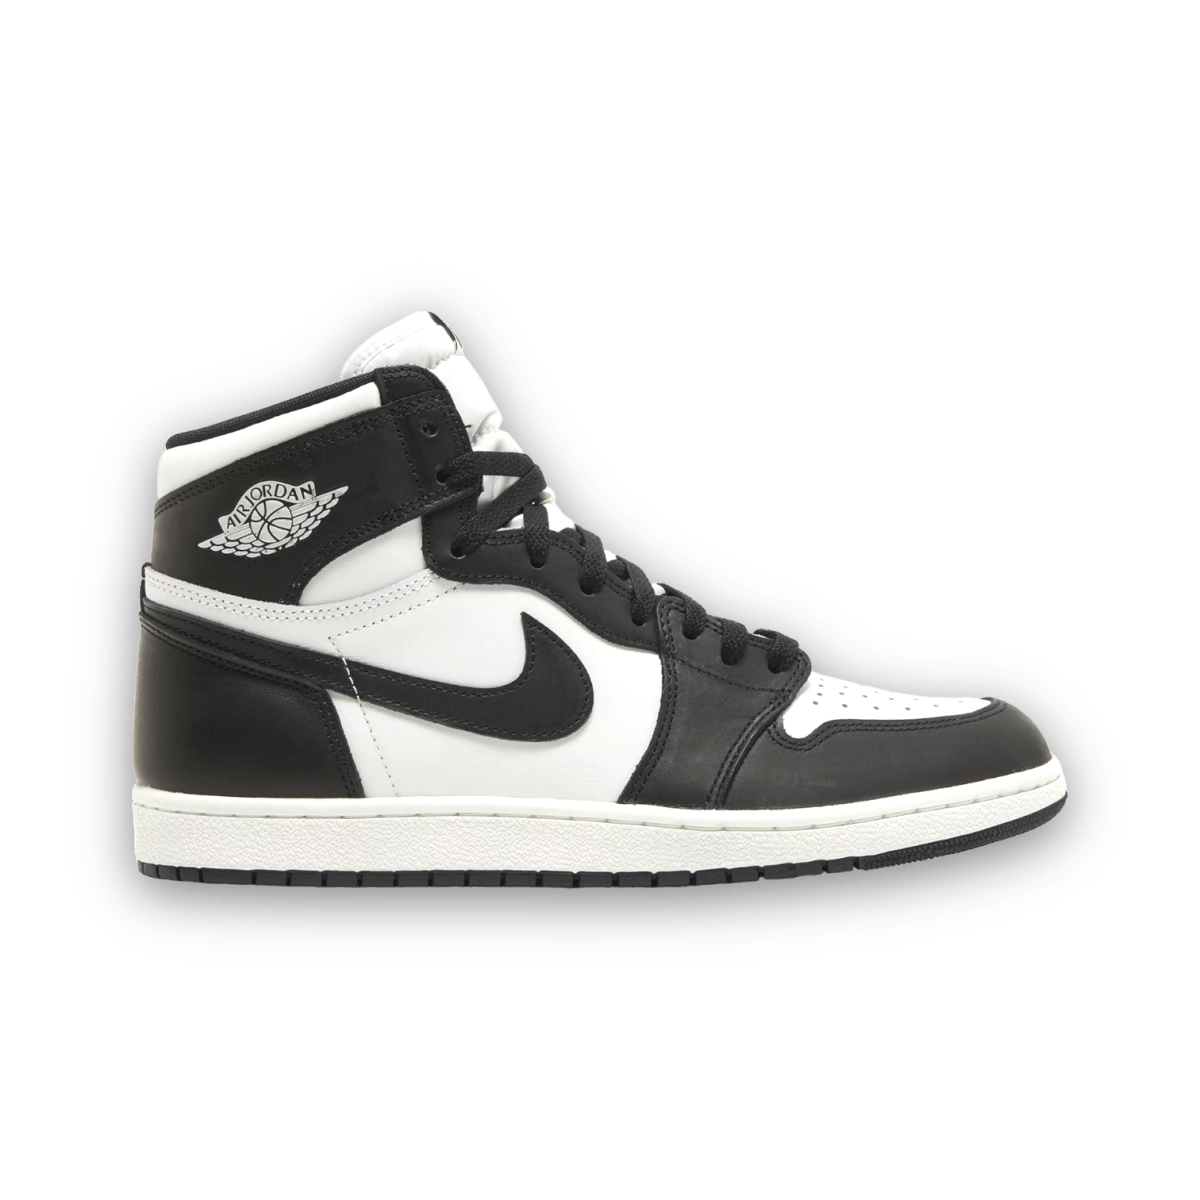 Air Jordan 1 Retro High '85 OG 'Black White' - High Sneaker - Jawns on Fire Sneakers & Streetwear